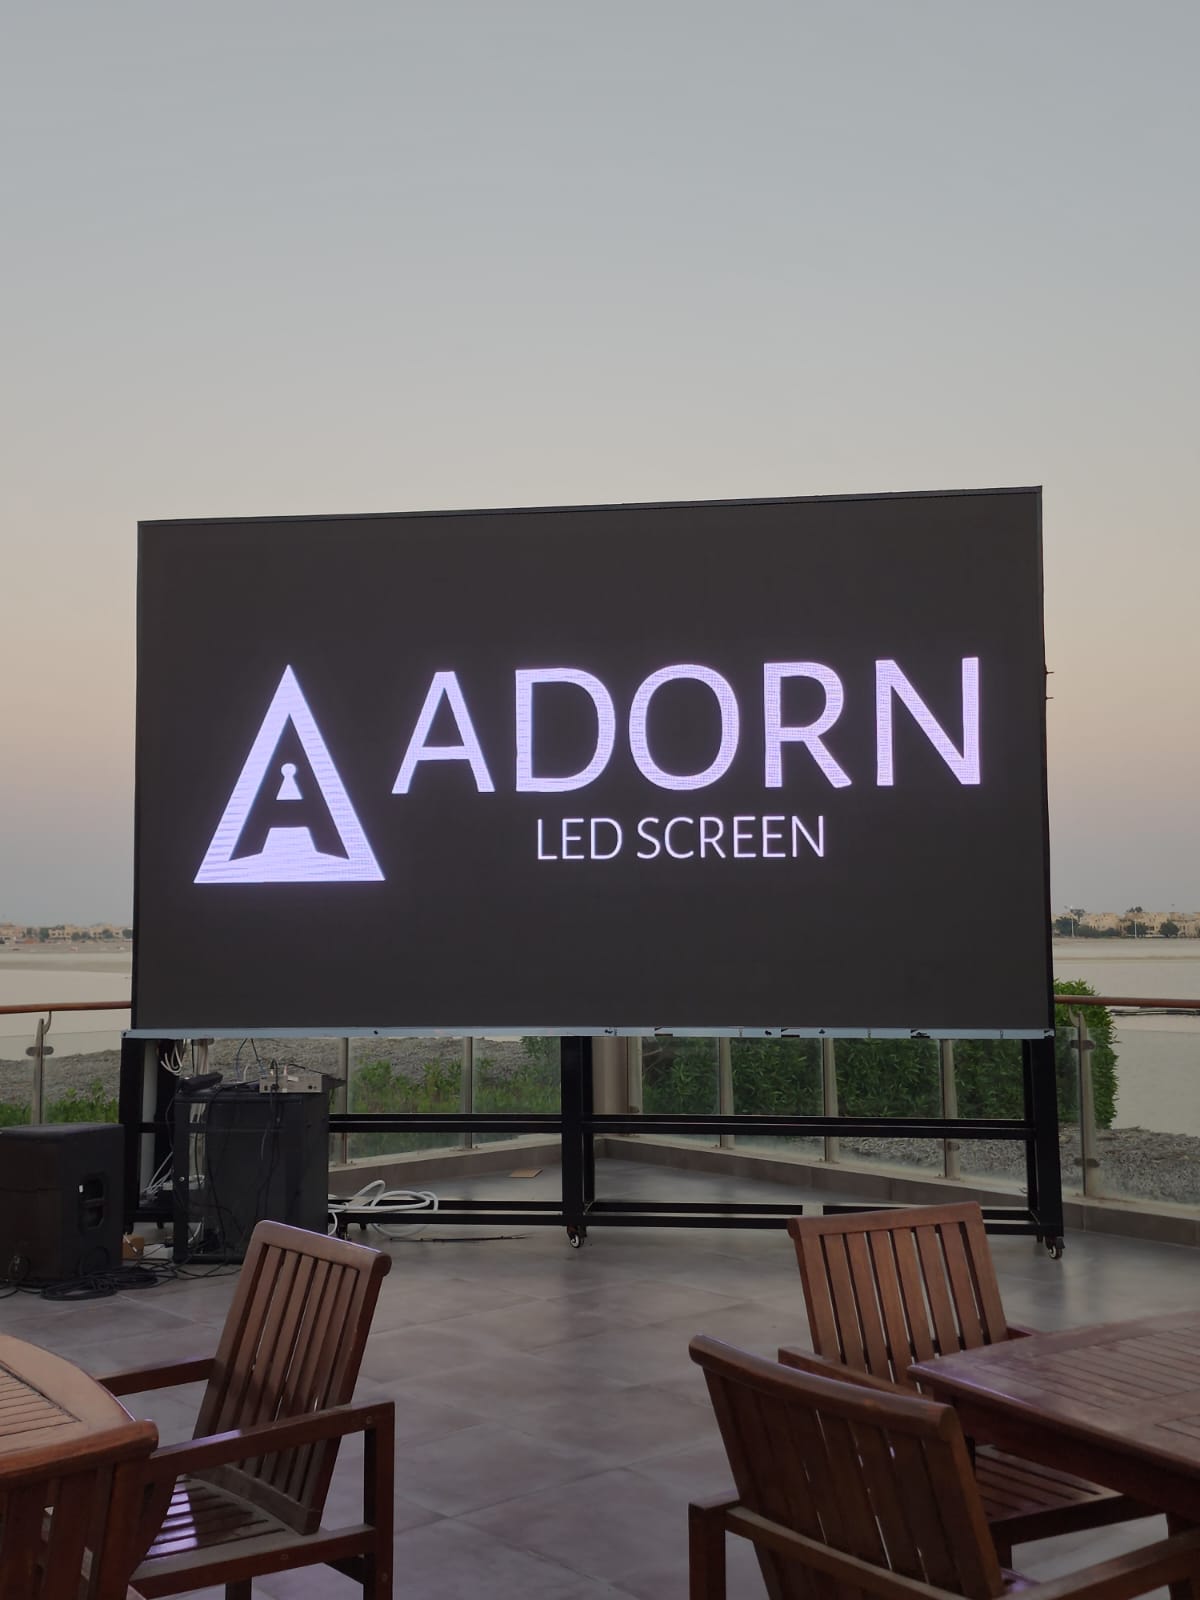 led_display_screen_uae<br />
indoor_rental_led_screen_in_uae<br />
outdoor_led_screen_dubai